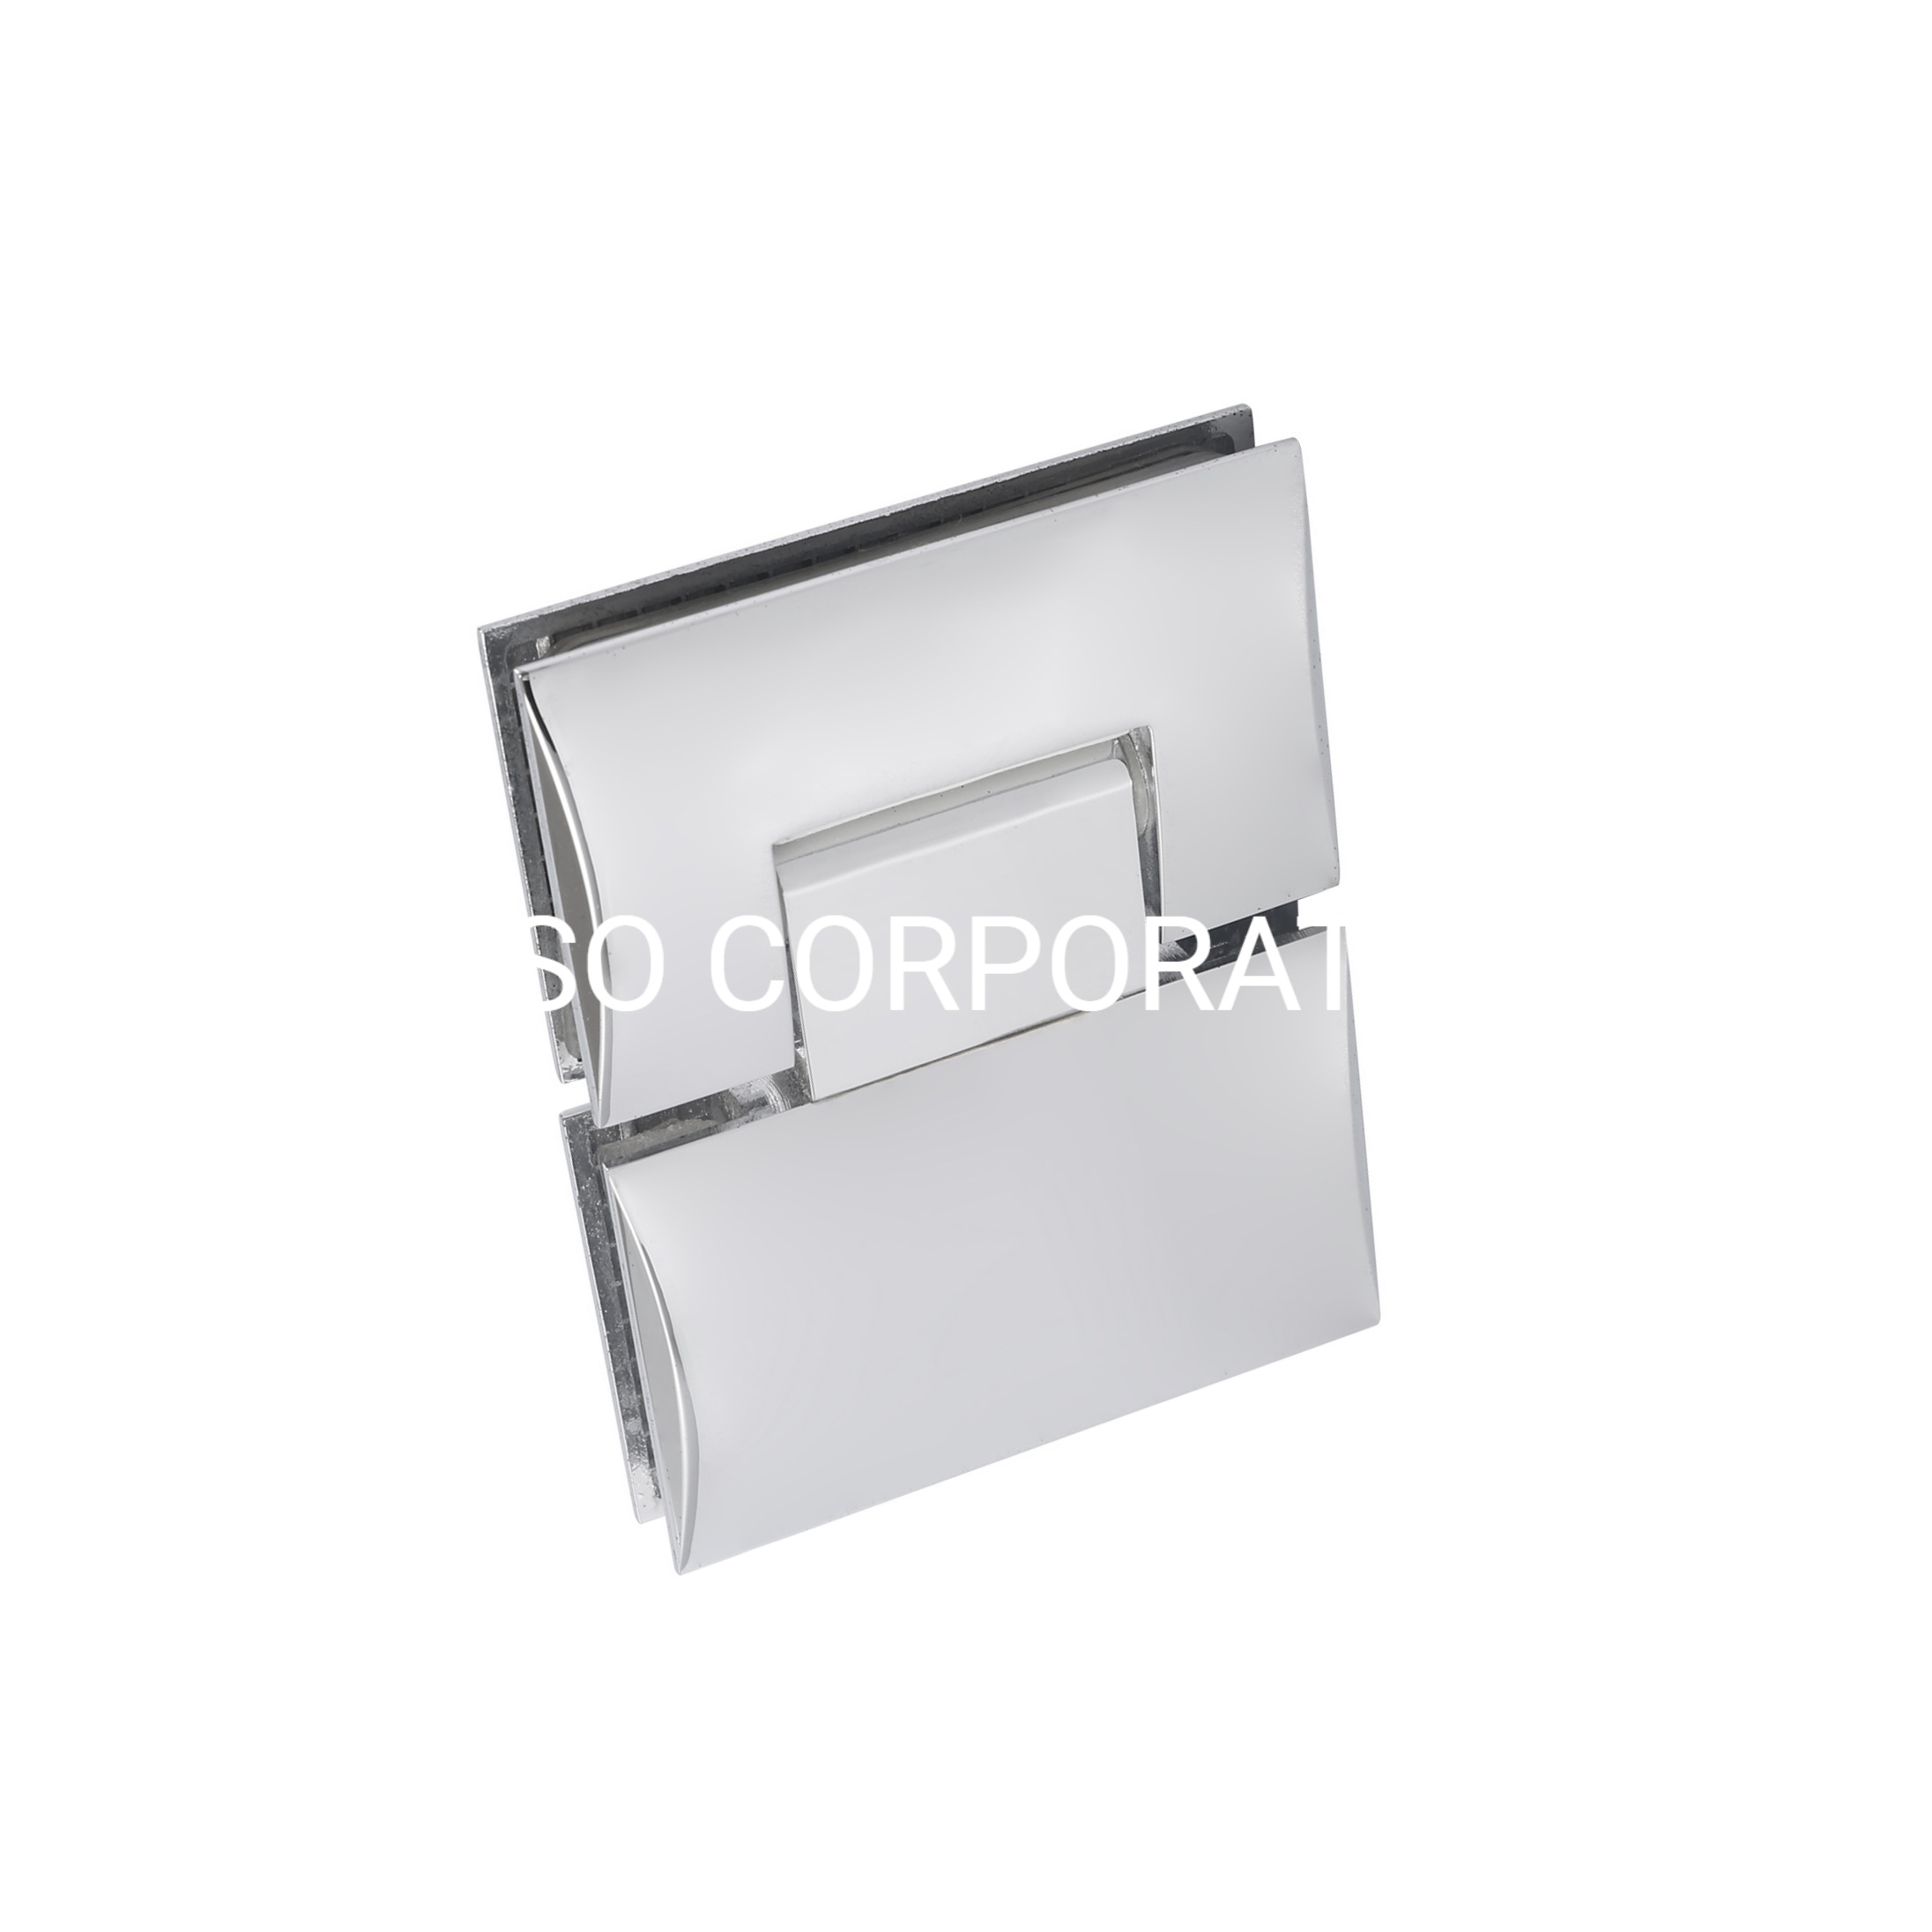 Metal Glass To Glass 180 Degree Sanitary Ware Hardware Brass Bathroom Hinge